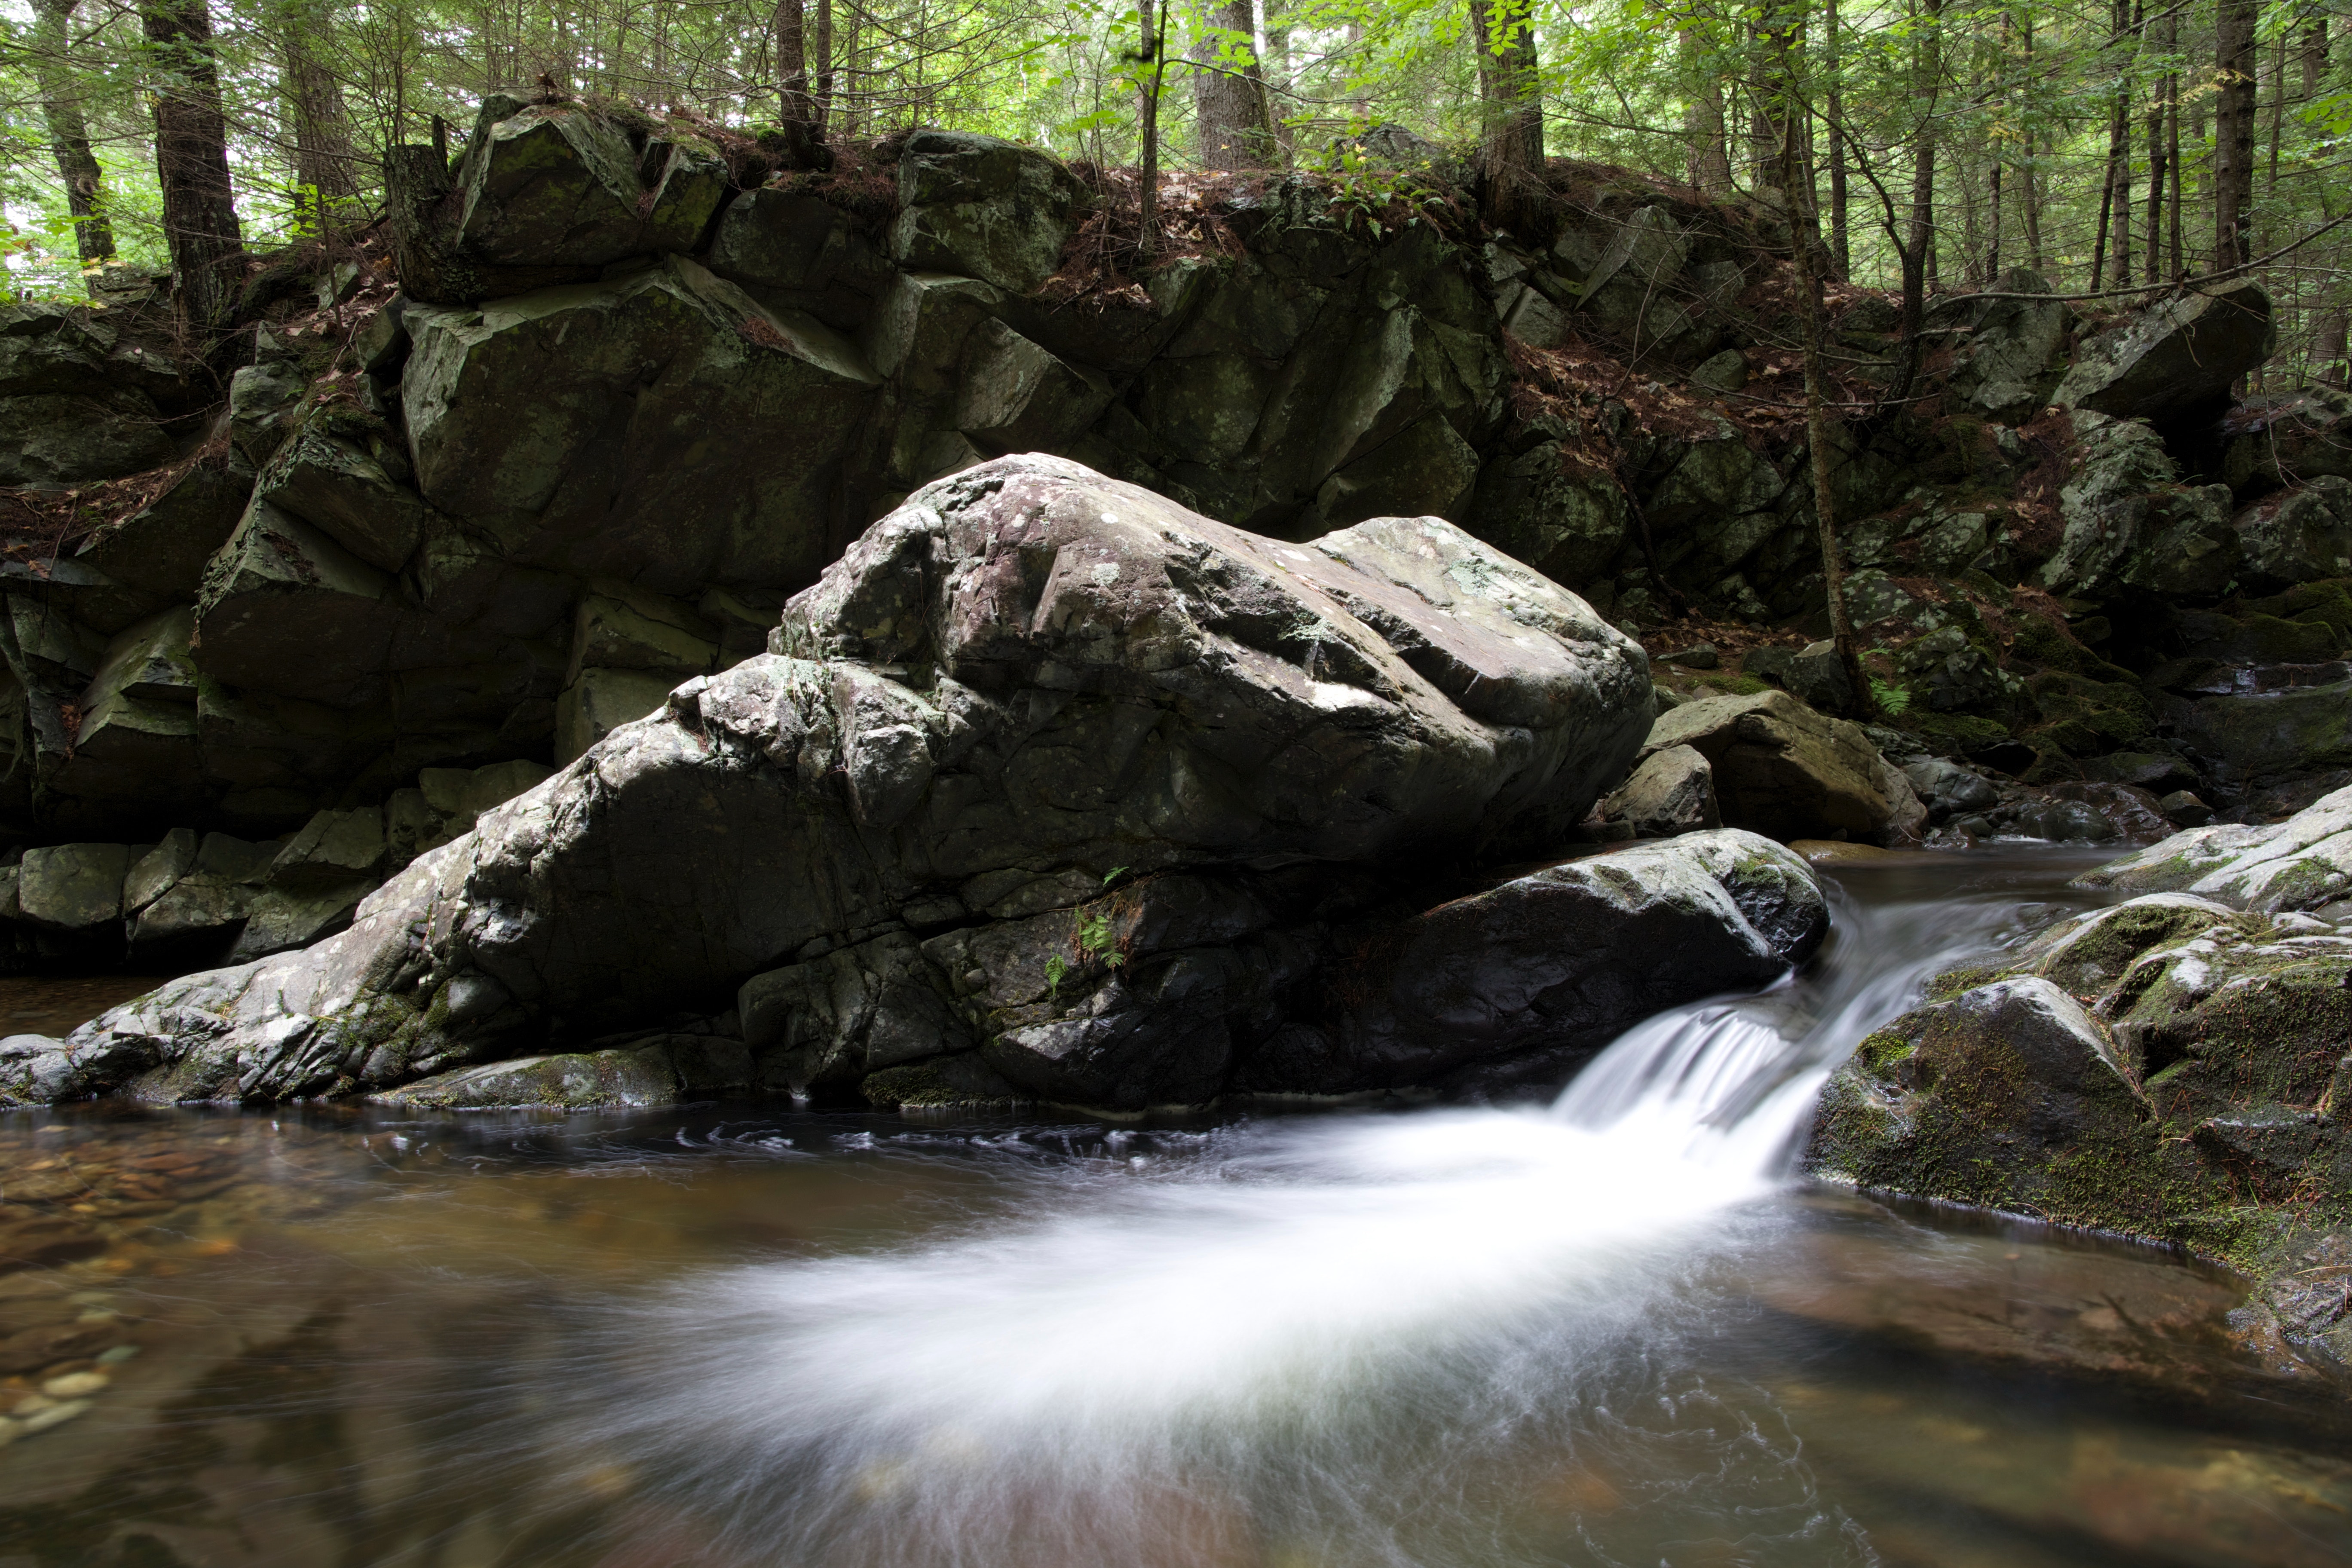 Water running through rocky terrain in the woods photo